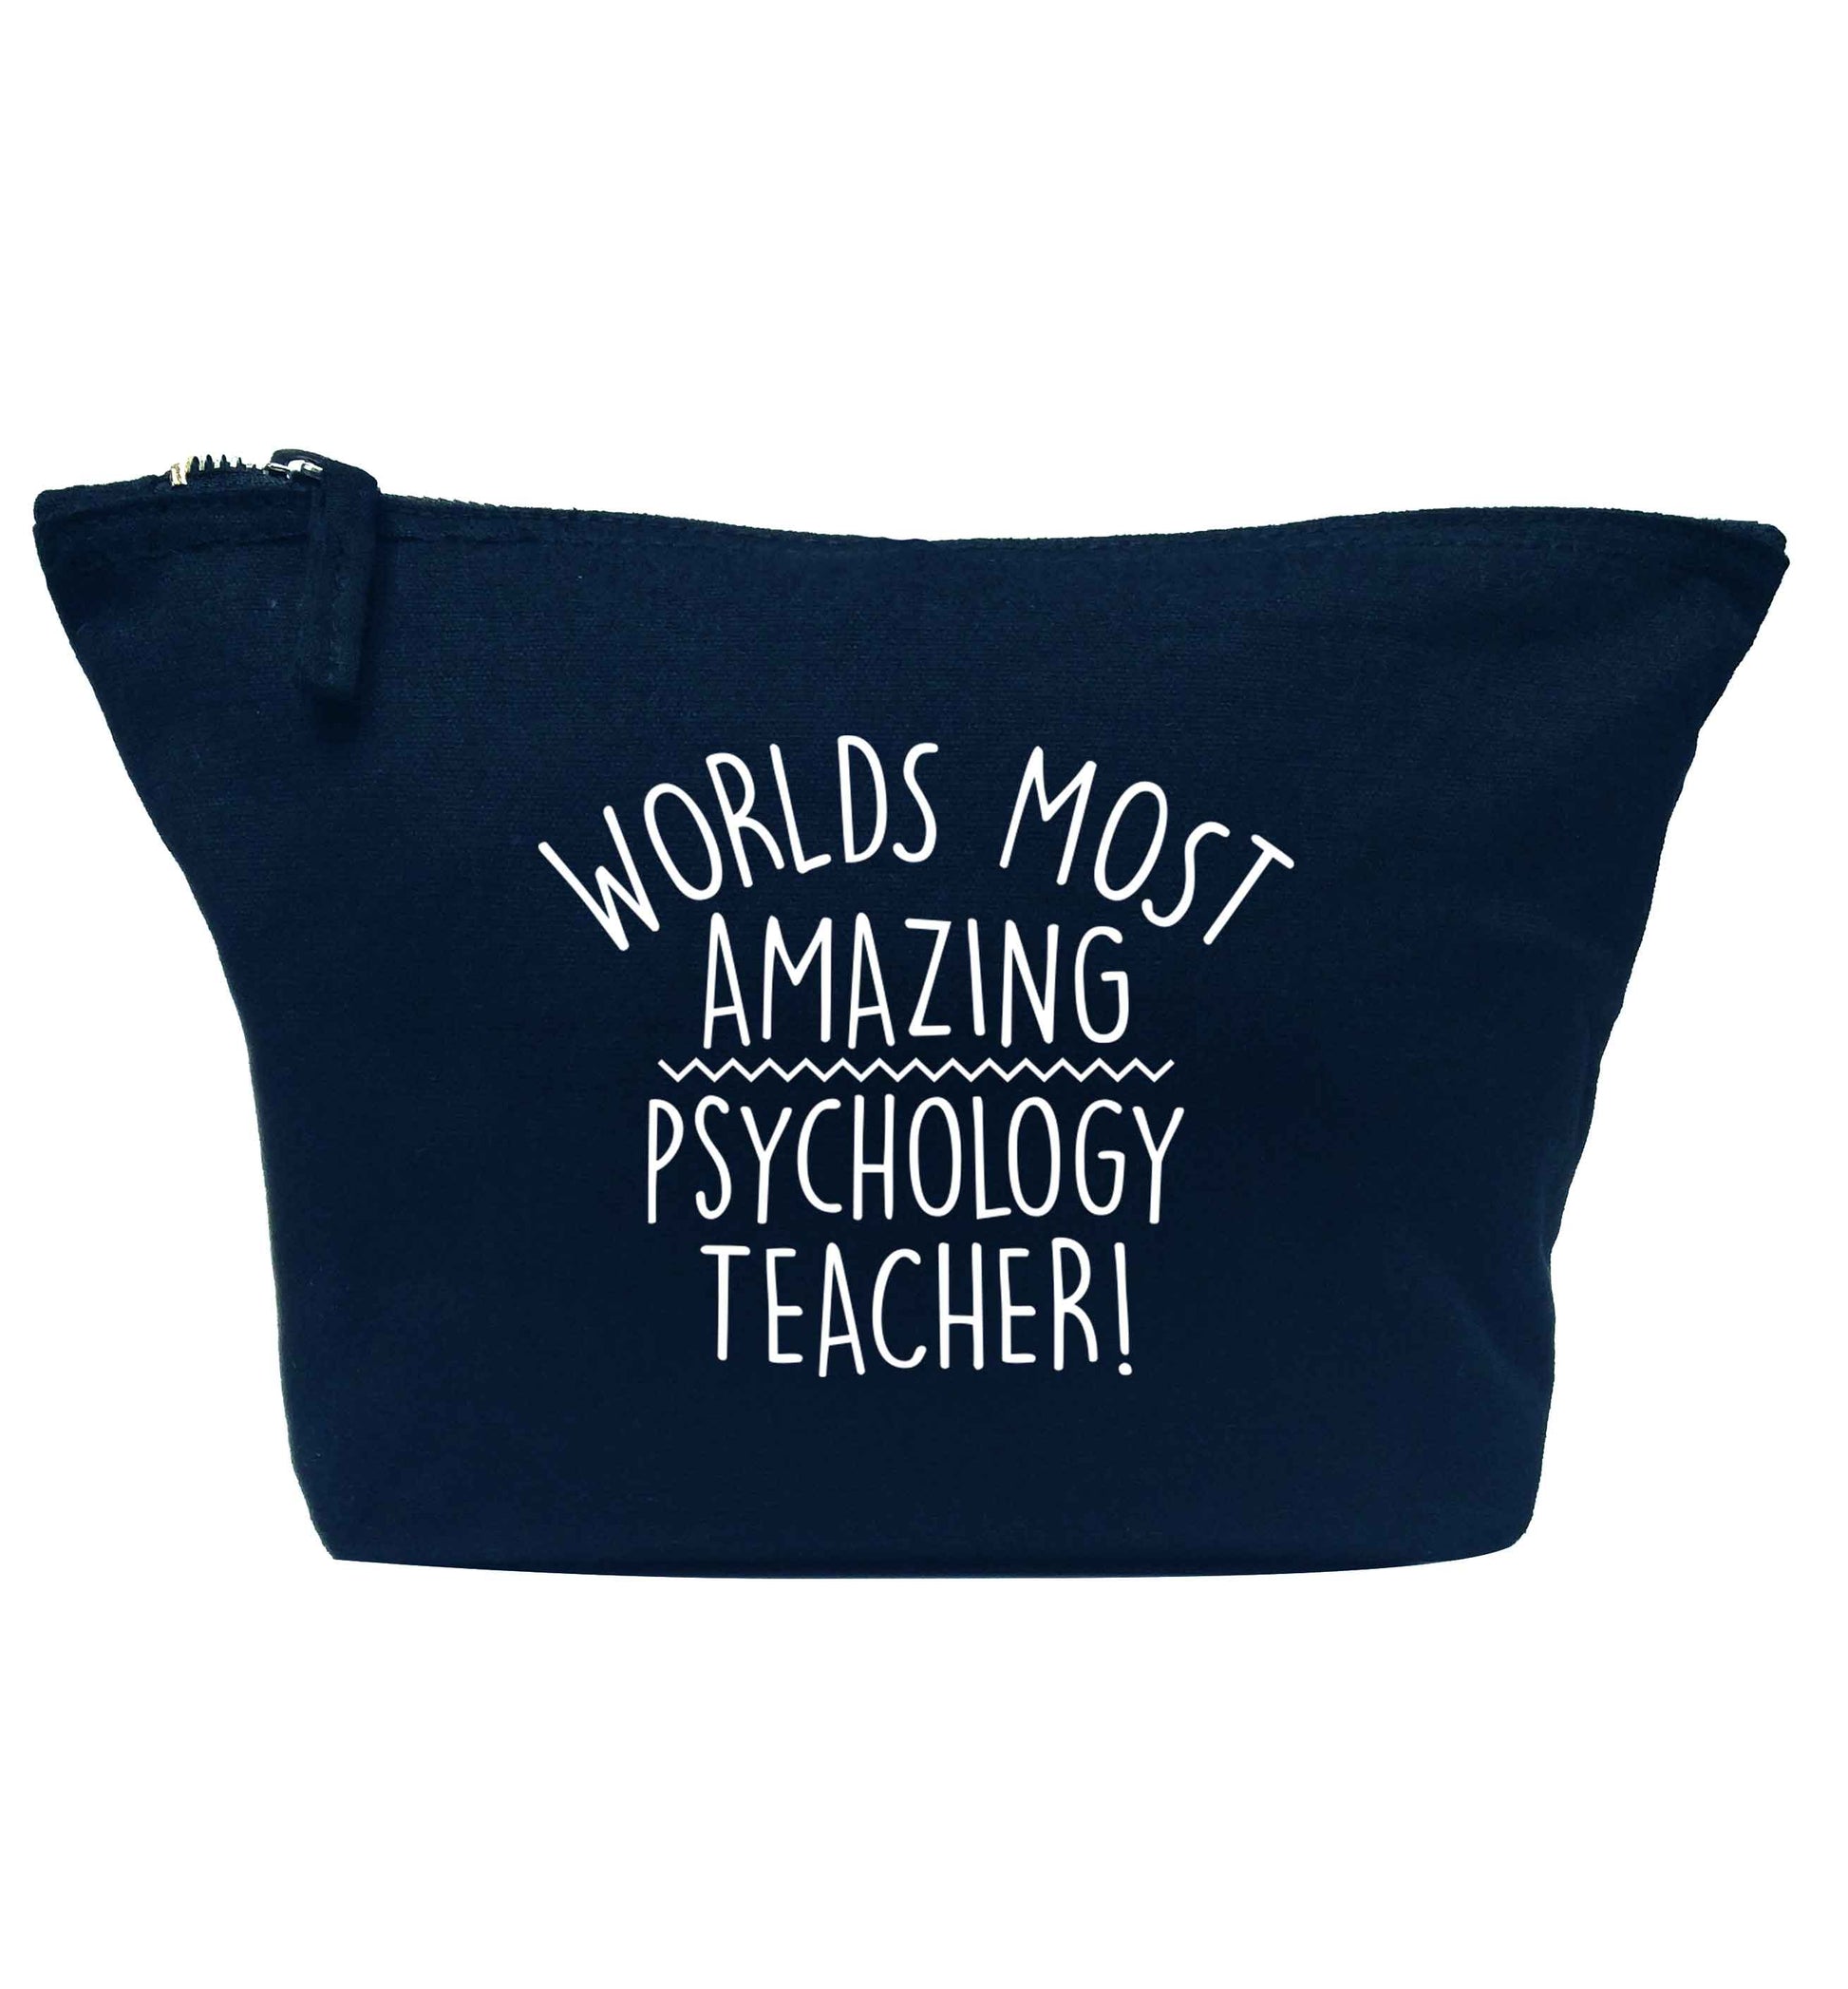 Worlds most amazing psychology teacher navy makeup bag